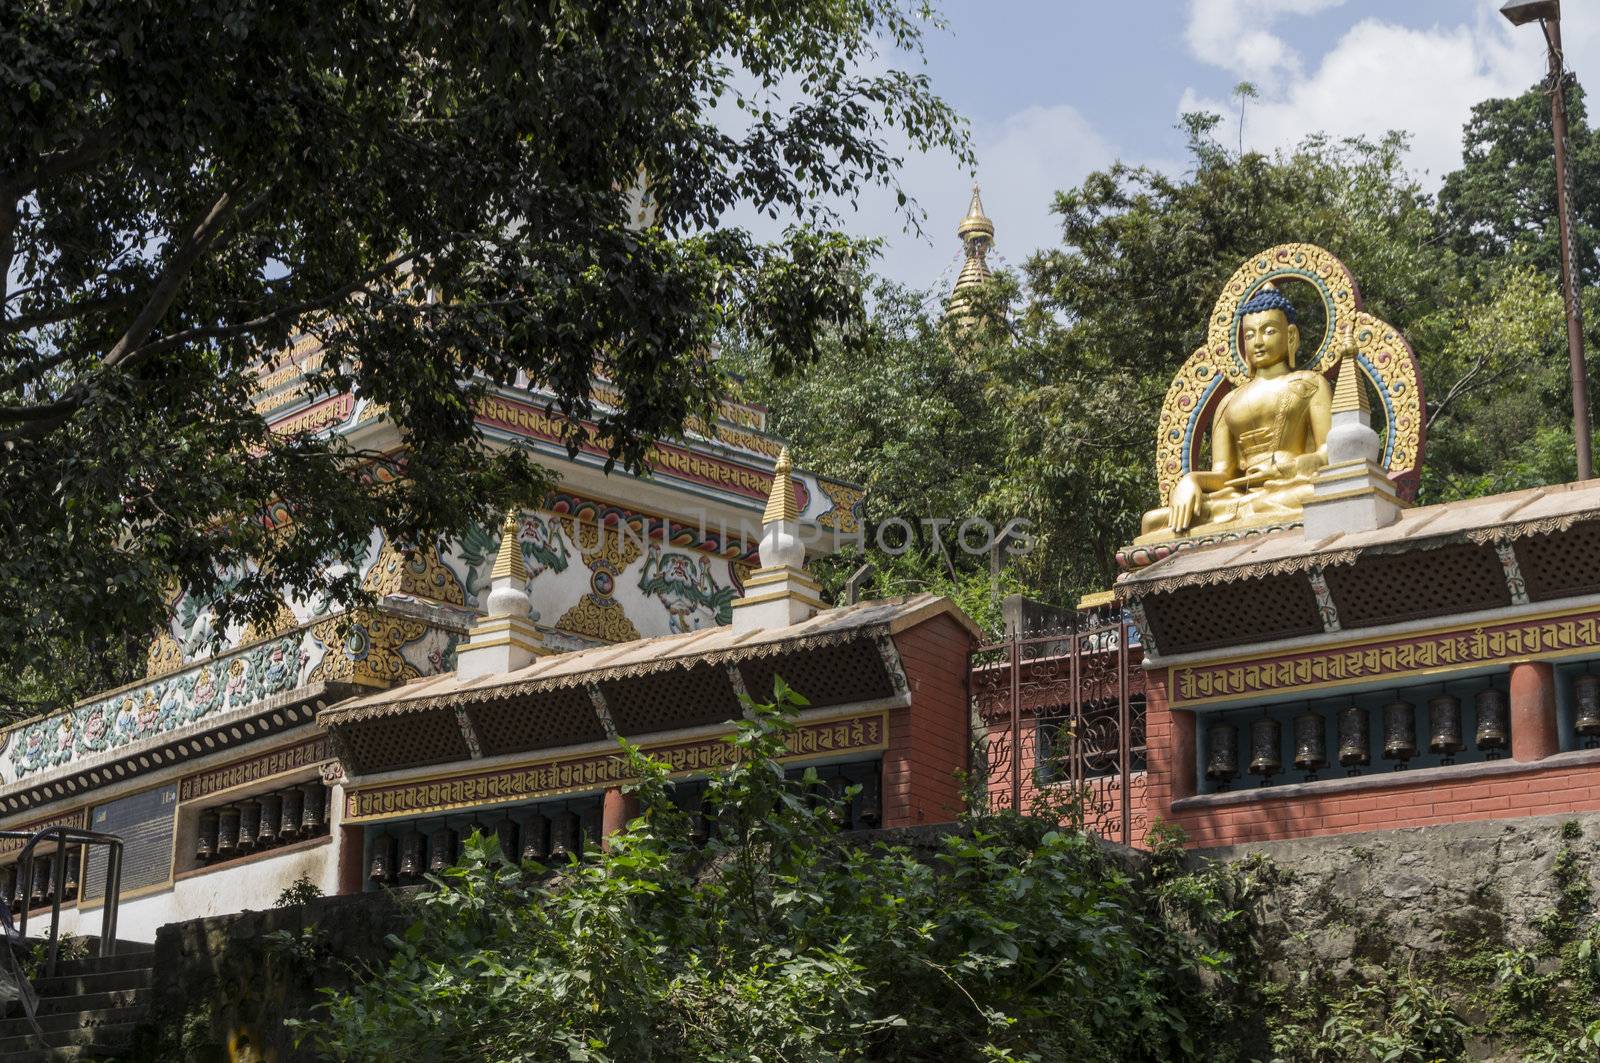 Buddhist temple in kathmandu, nepal with big sitting buddha on top